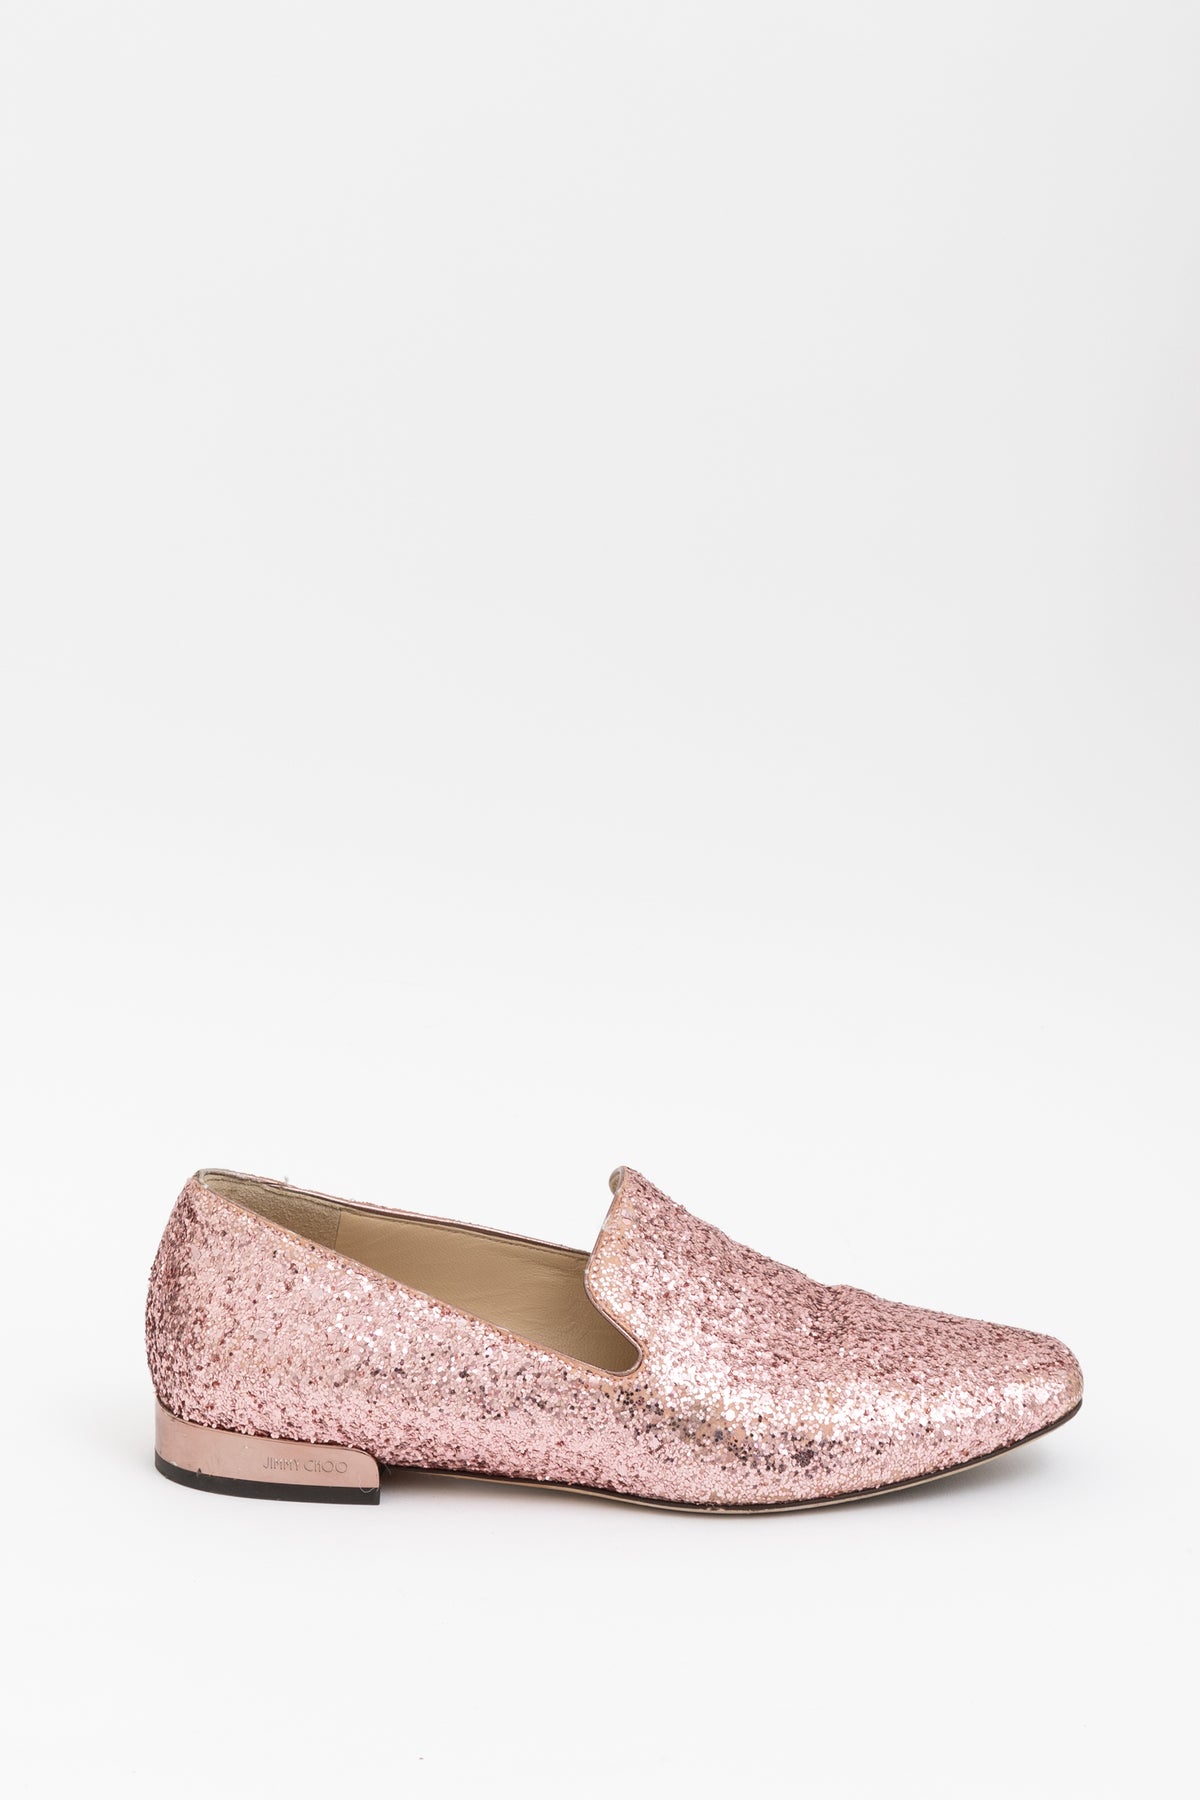 jimmy-choo-jaida-pink-sequin-loafers-385-e266